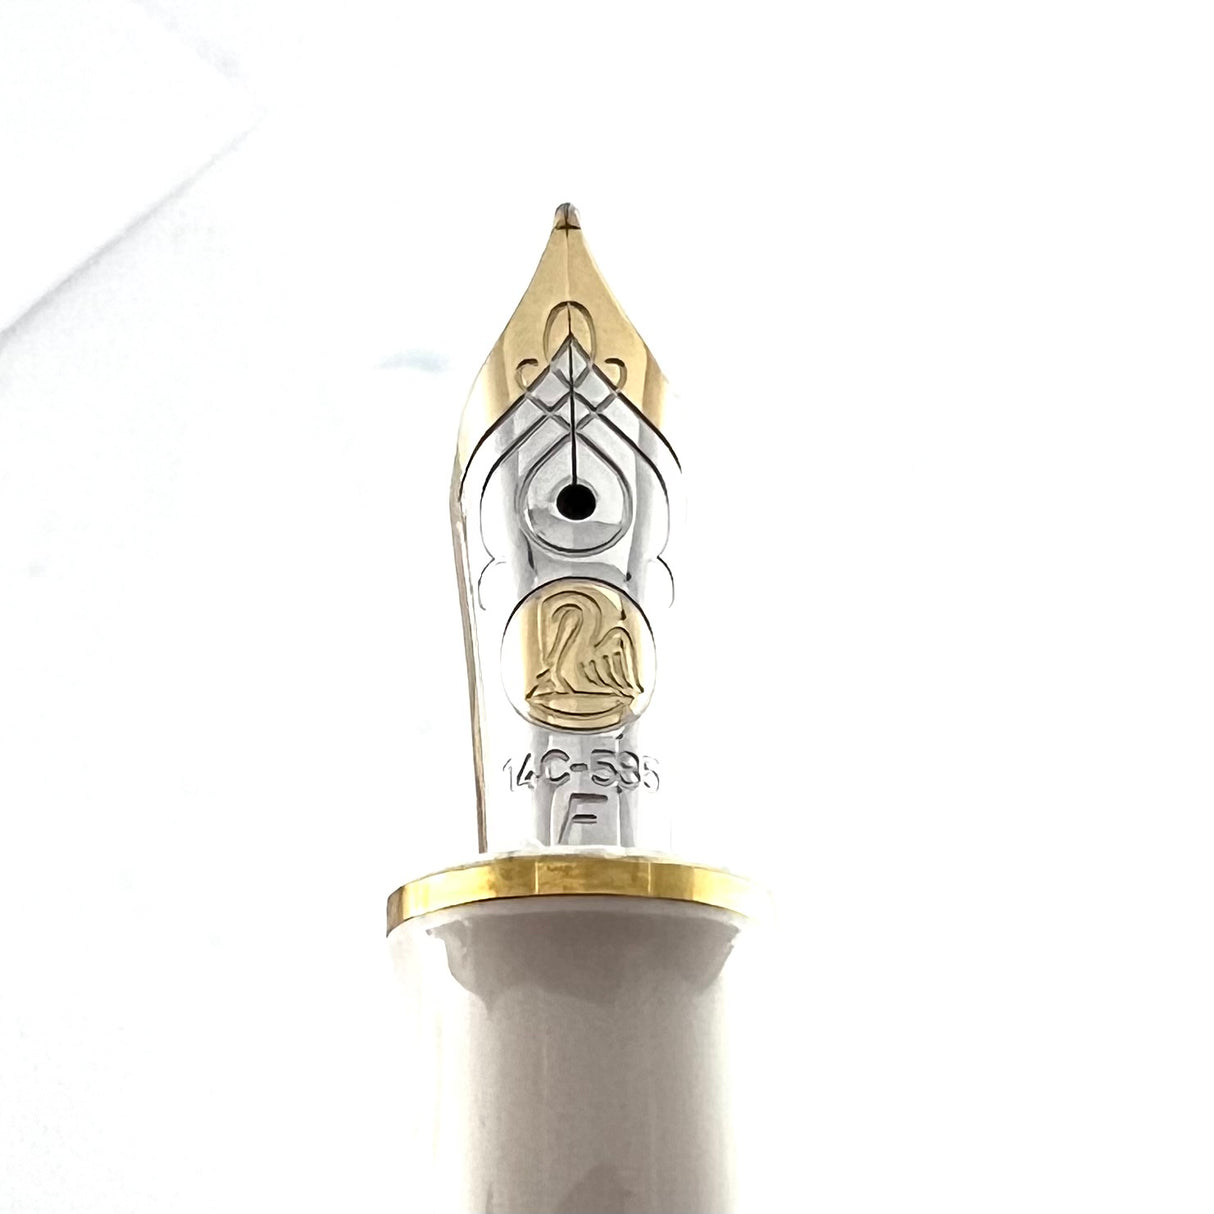 Pelikan M600 Violet-White Striped Fountain Pen